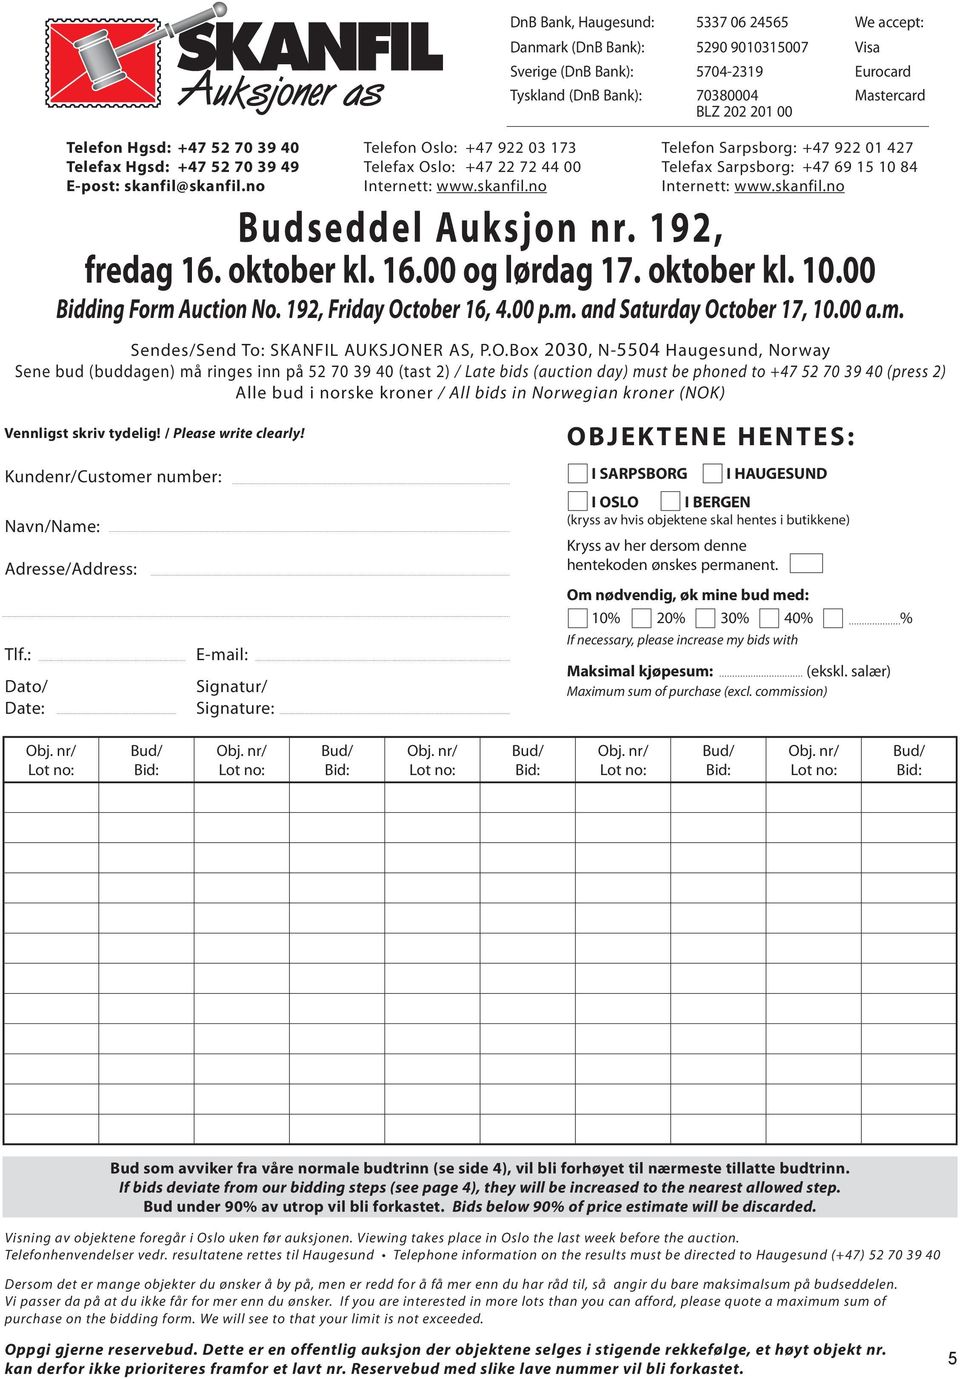 skanfil.no Budseddel Auksjon nr. 192, fredag 16. oktober kl. 16.00 og lørdag 17. oktober kl. 10.00 Bidding Form Auction No. 192, Friday October 16, 4.00 p.m. and Saturday October 17, 10.00 a.m. Sendes/Send To: SKANFIL Auksjoner AS, P.